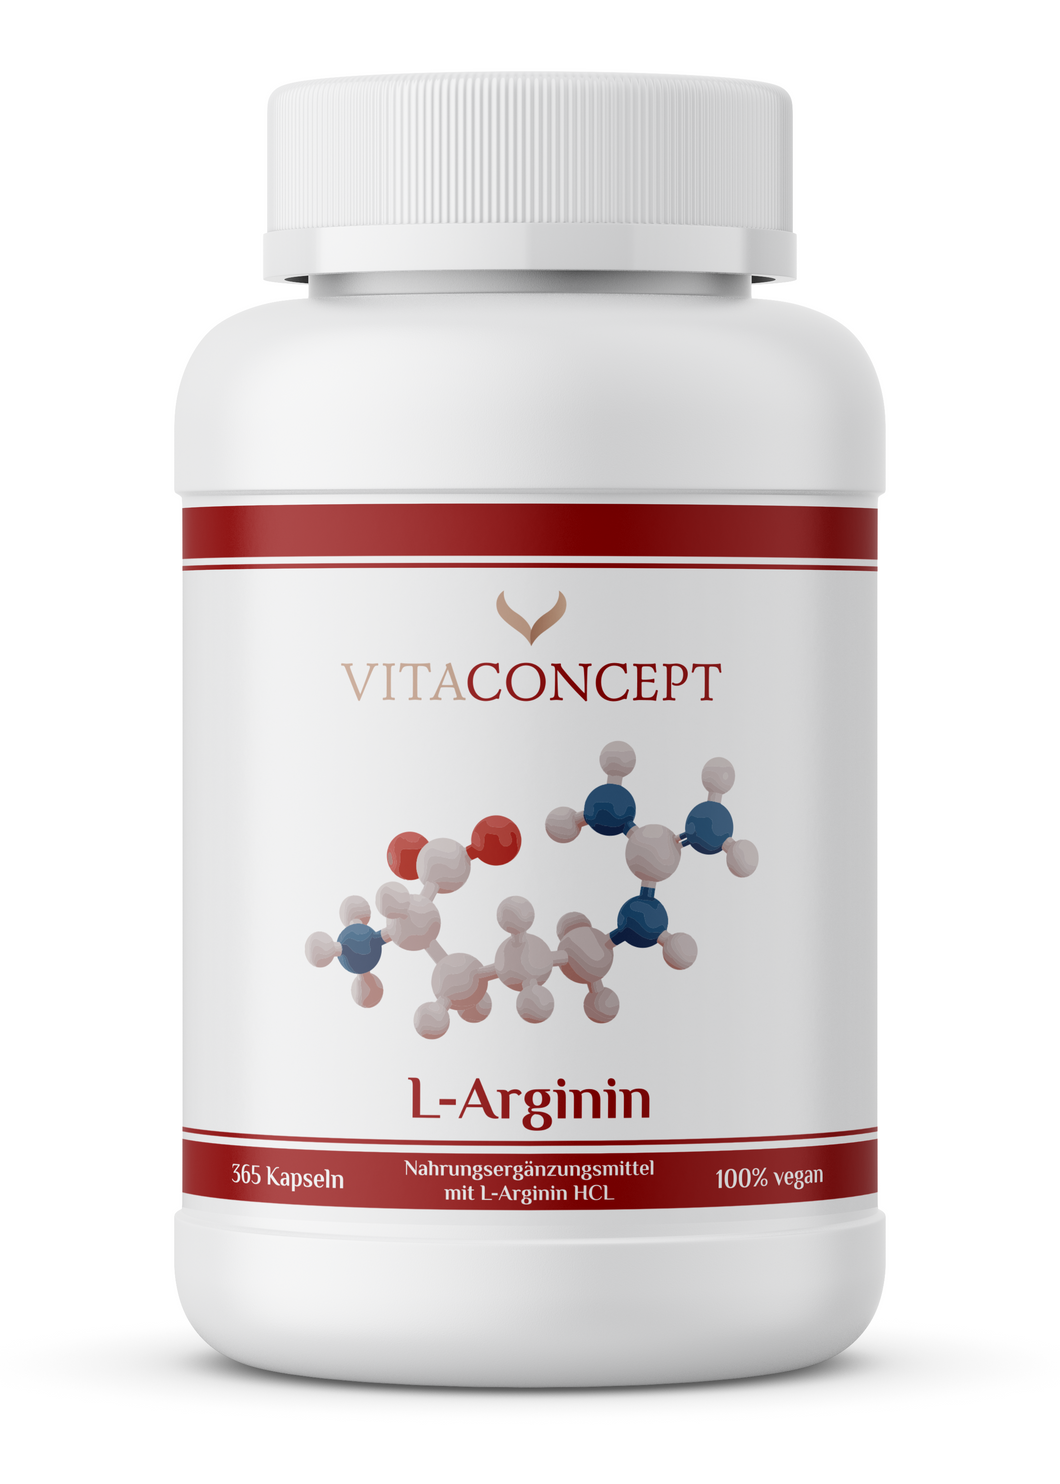 L-Arginin - Nahrungsergänzungsmittel mit L-Arginin, 1000 mg 